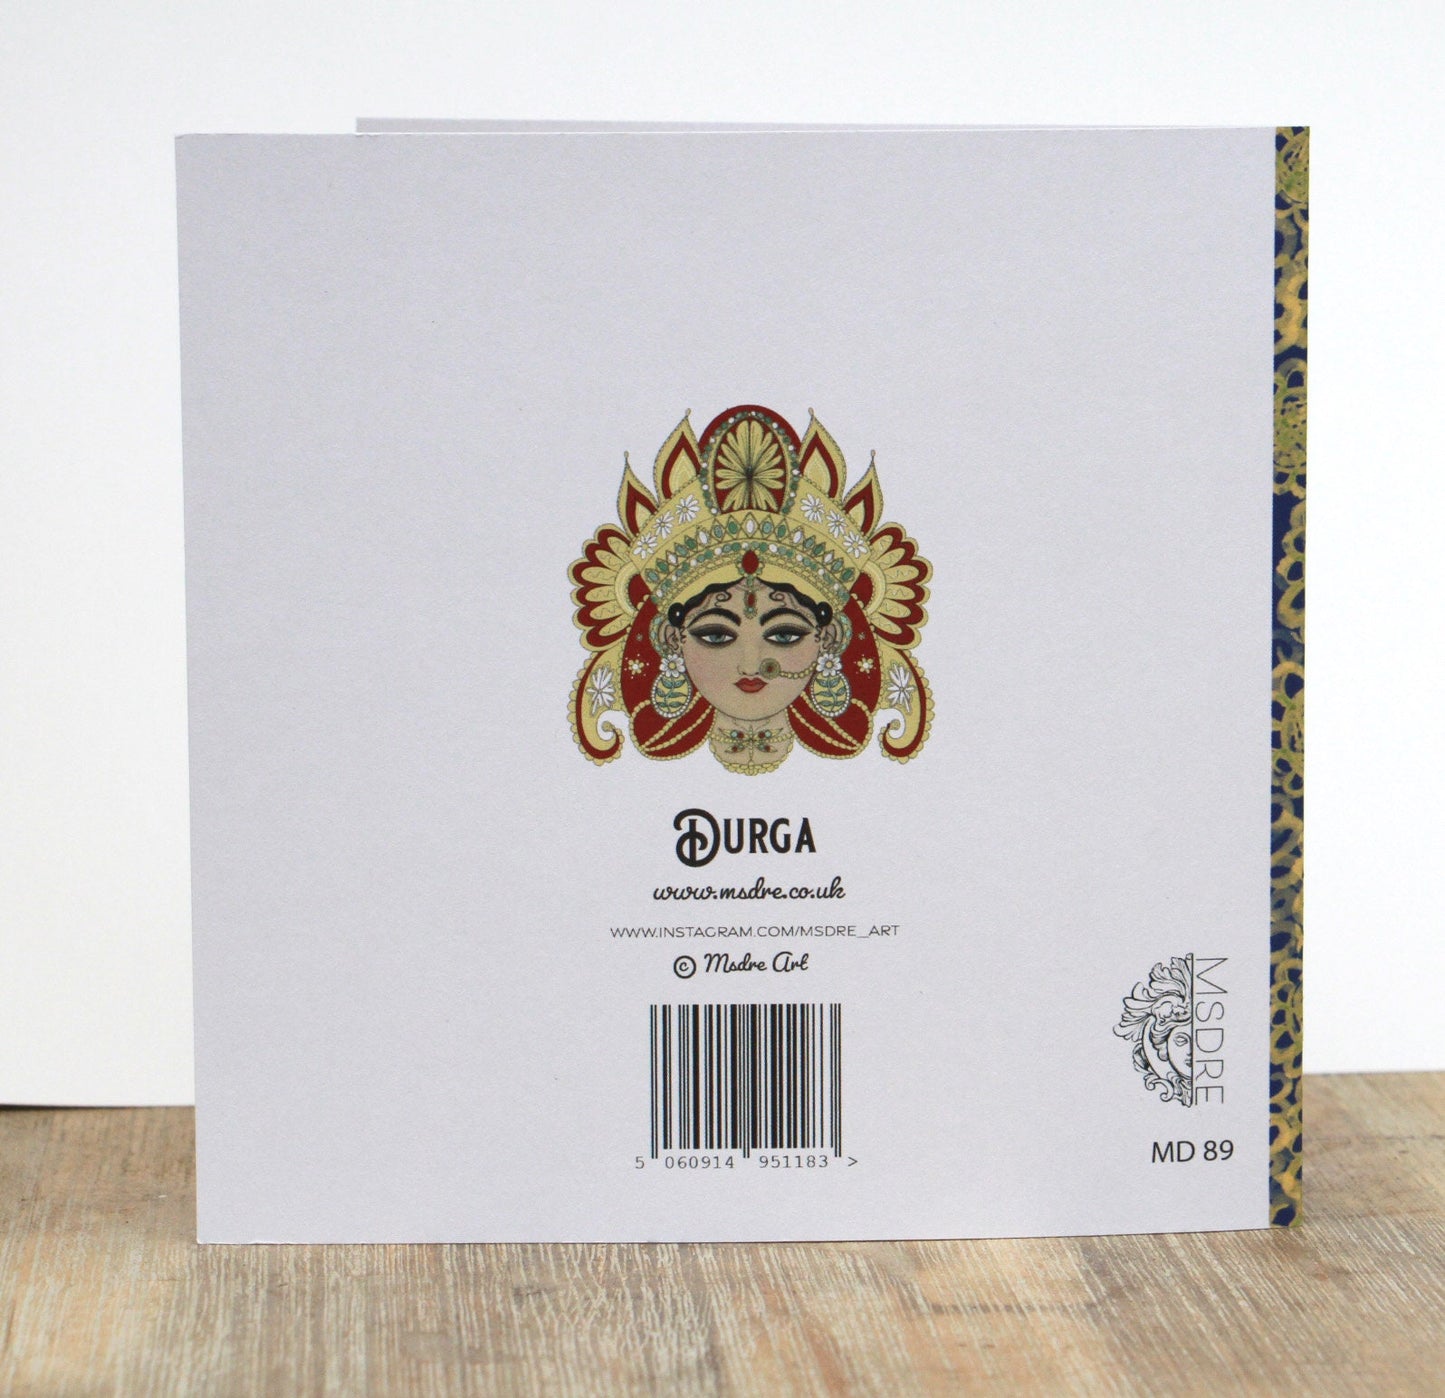 Durga Ma Indian Goddess Msdre Greetings Card Square Printed in the UK